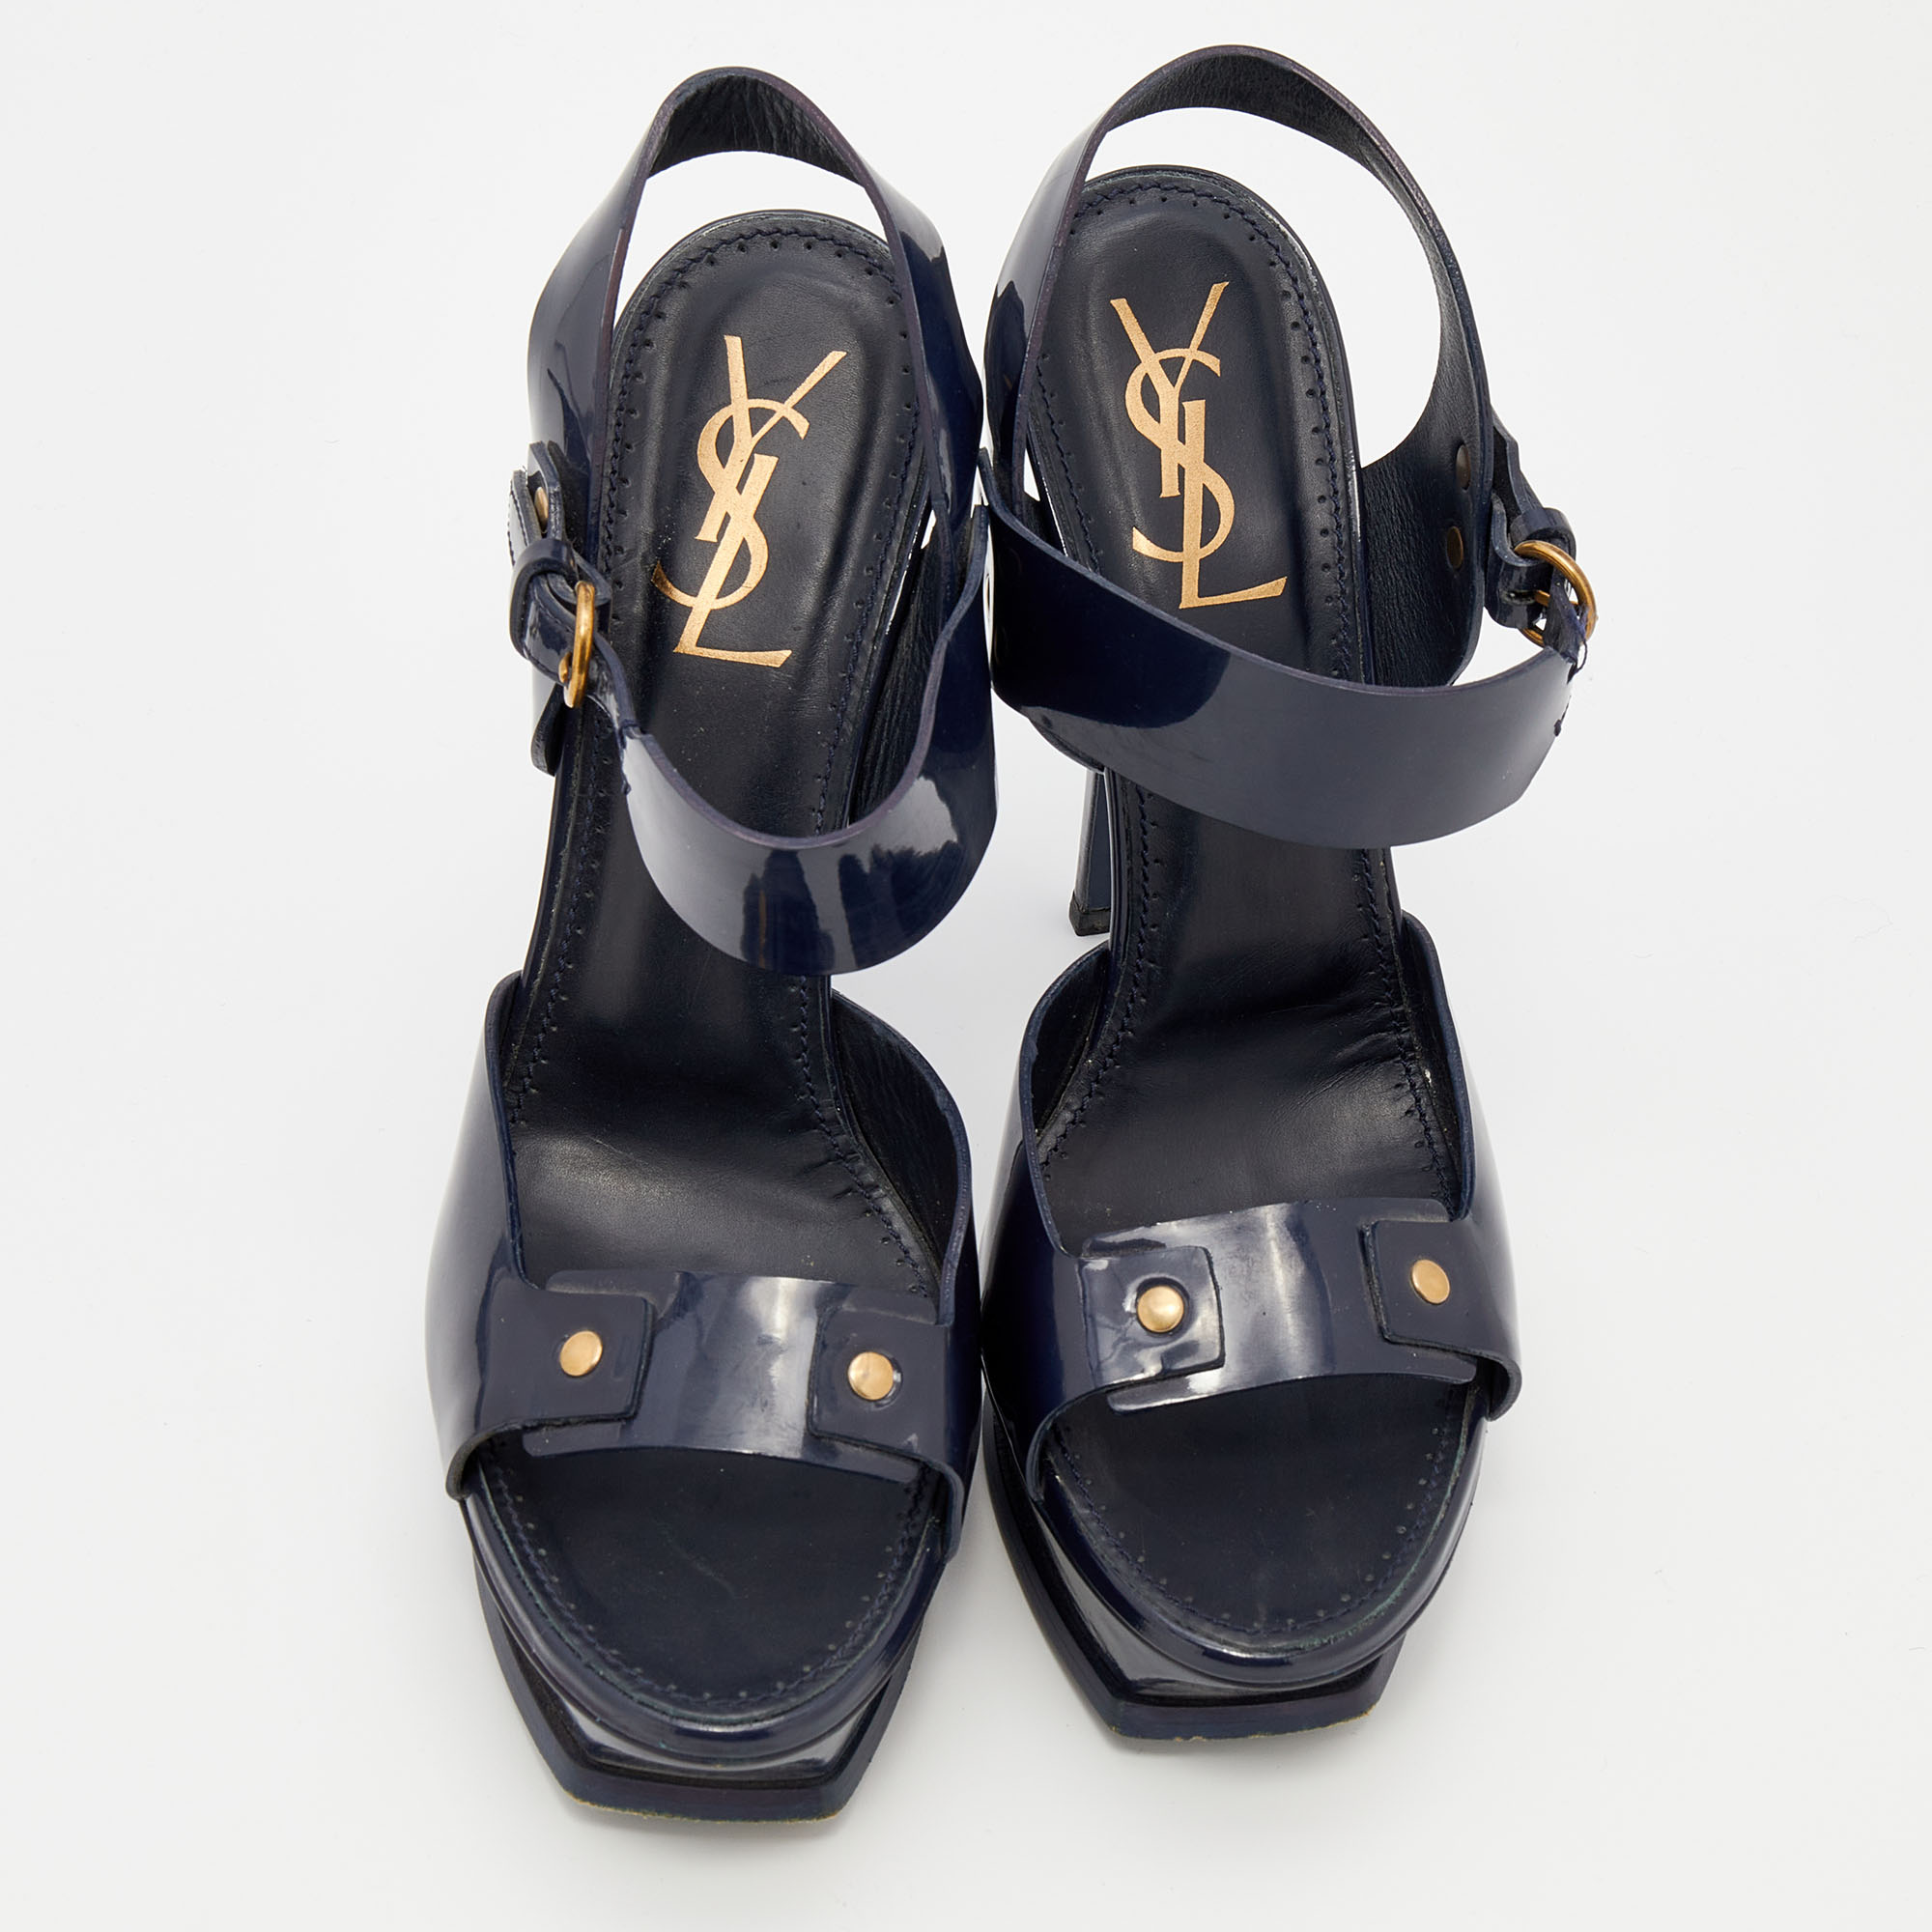 Yves Saint Laurent Navy Blue Patent Leather Studded Ankle Strap Platform Sandals Size 40